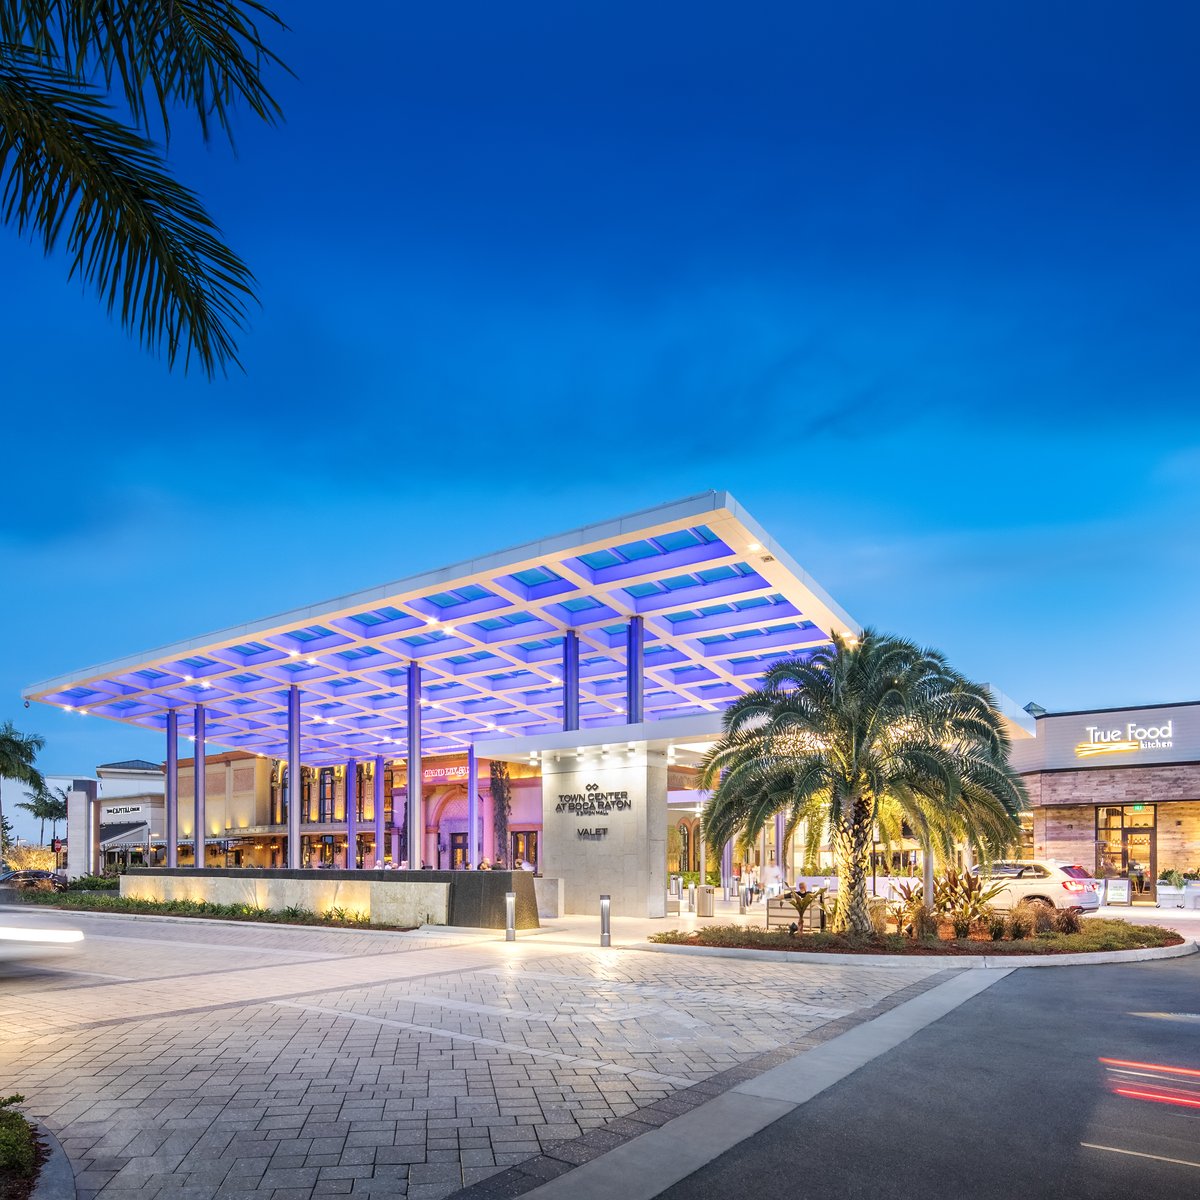 Town Center Mall Completes Multi-Million-Dollar Renovations • Boca